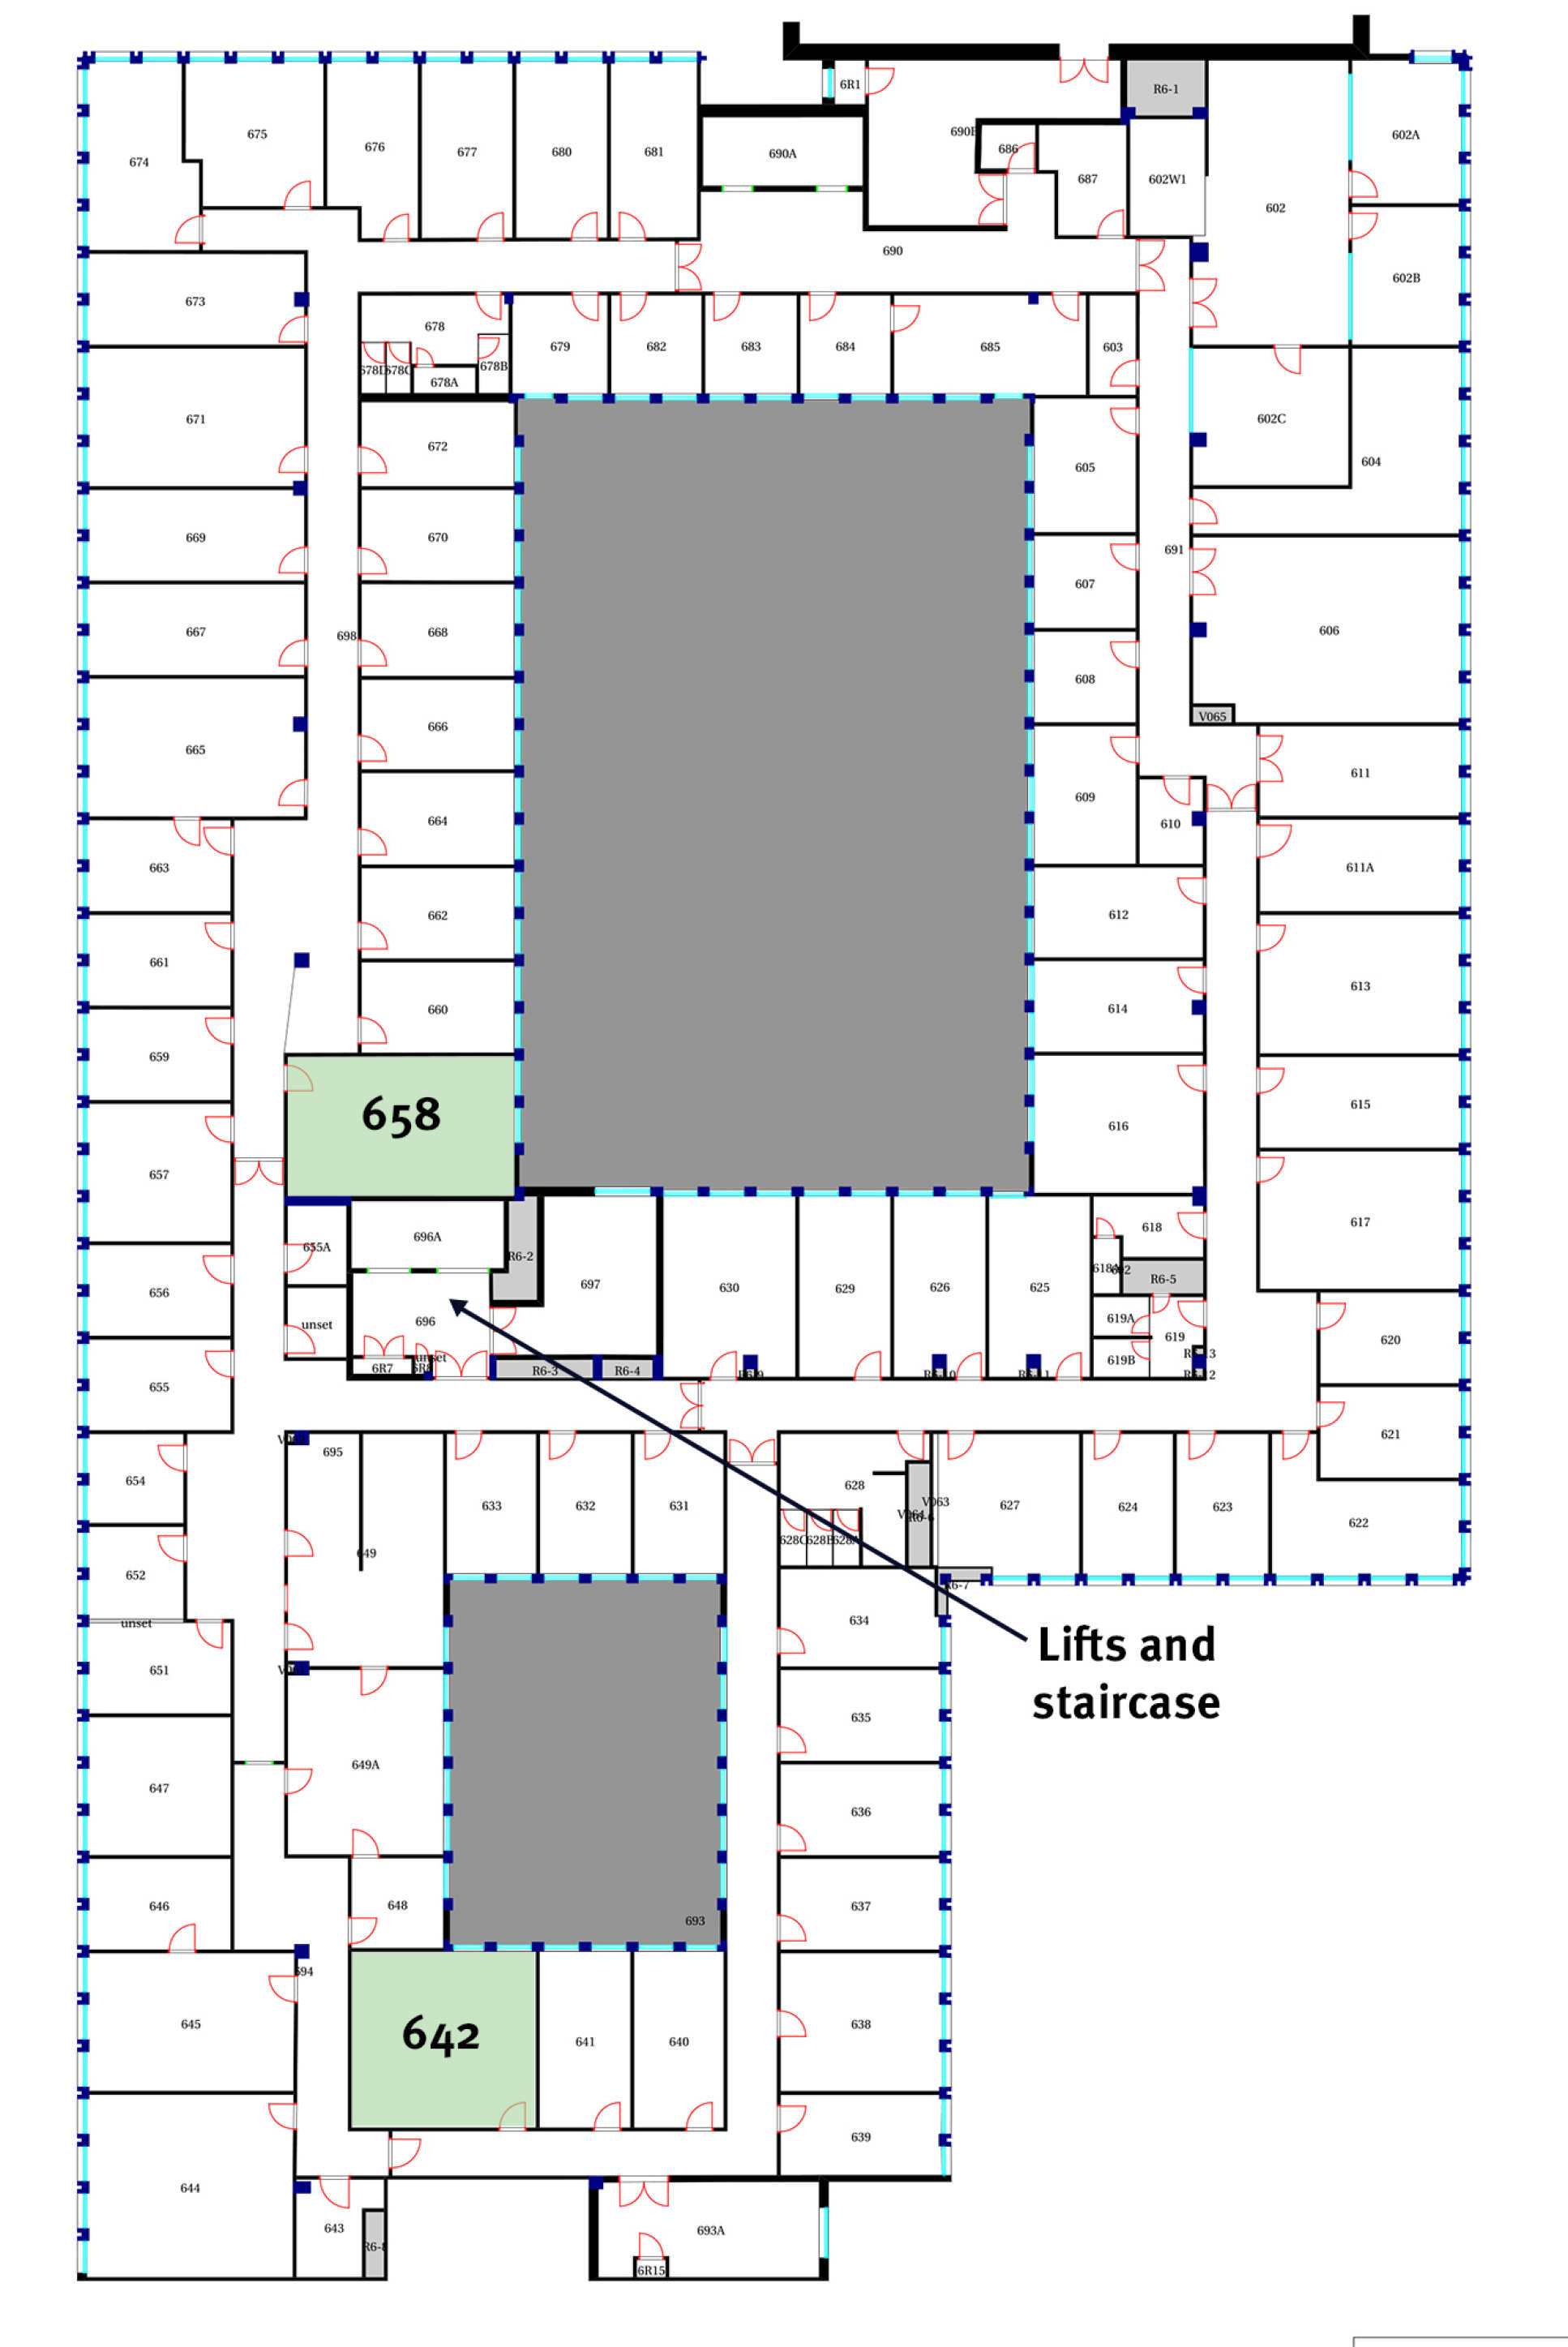 Floorplan of Huxley Building sixth floor